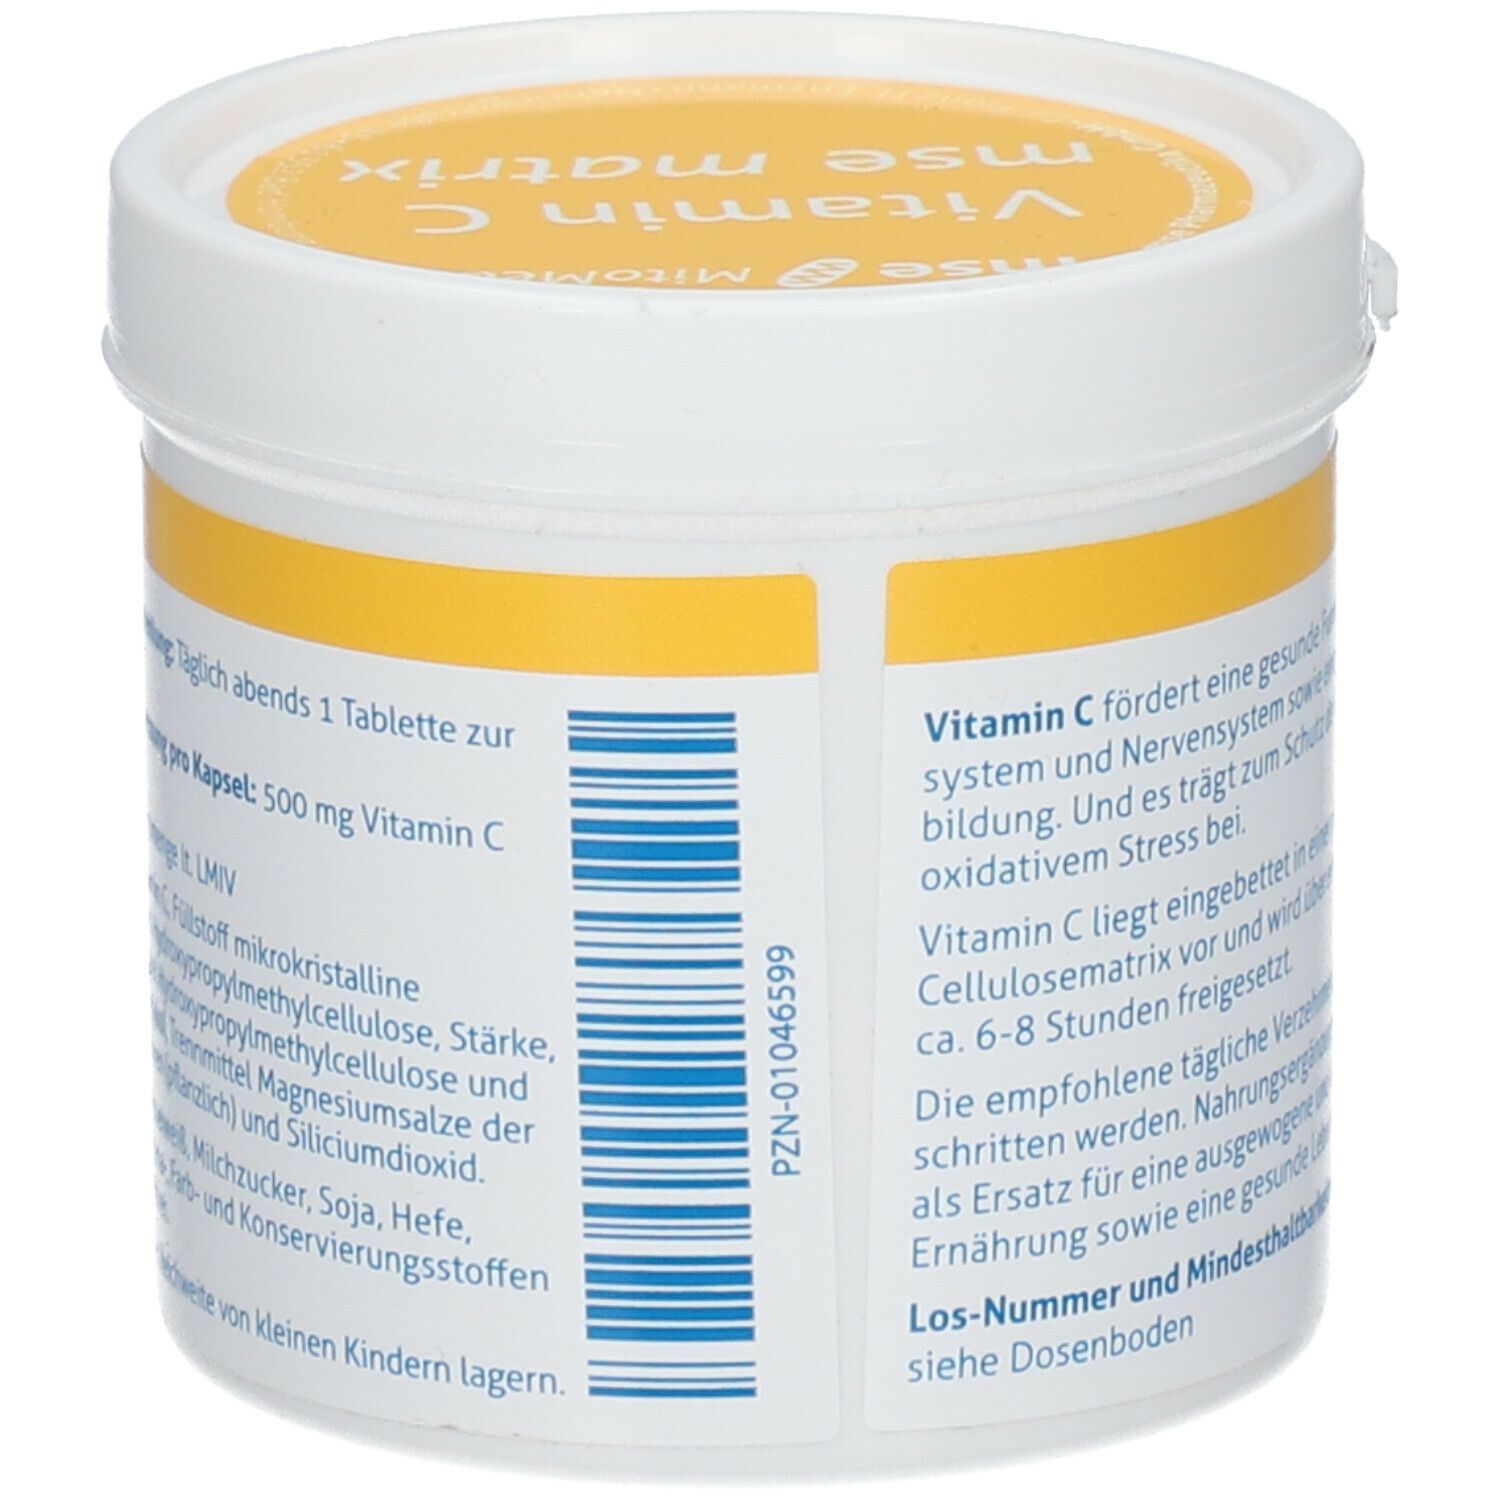 Vitamin C MSE Matrix Tabletten